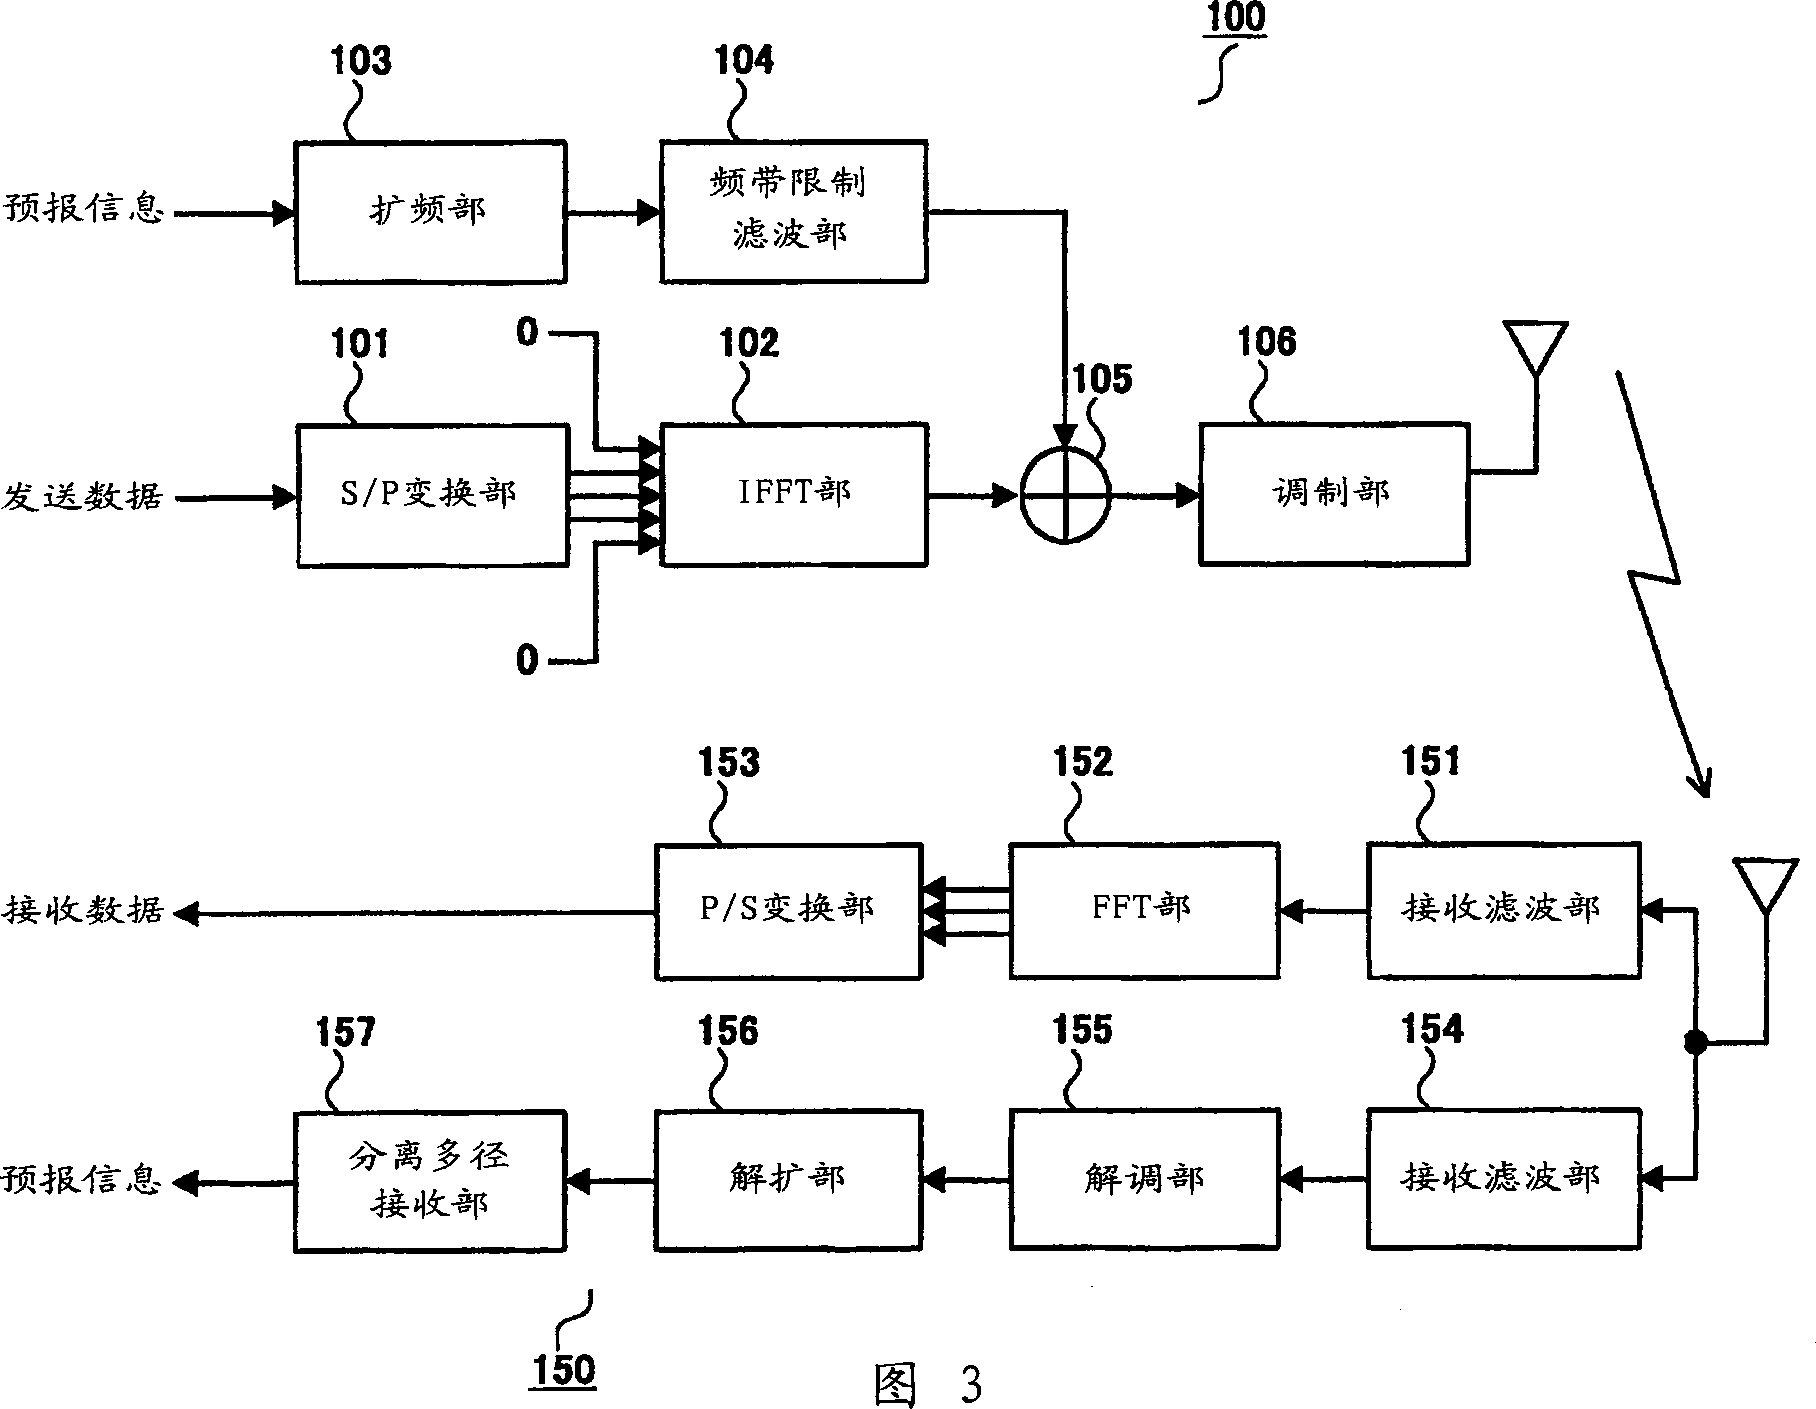 Transmitter, receiver, and method of data transmission